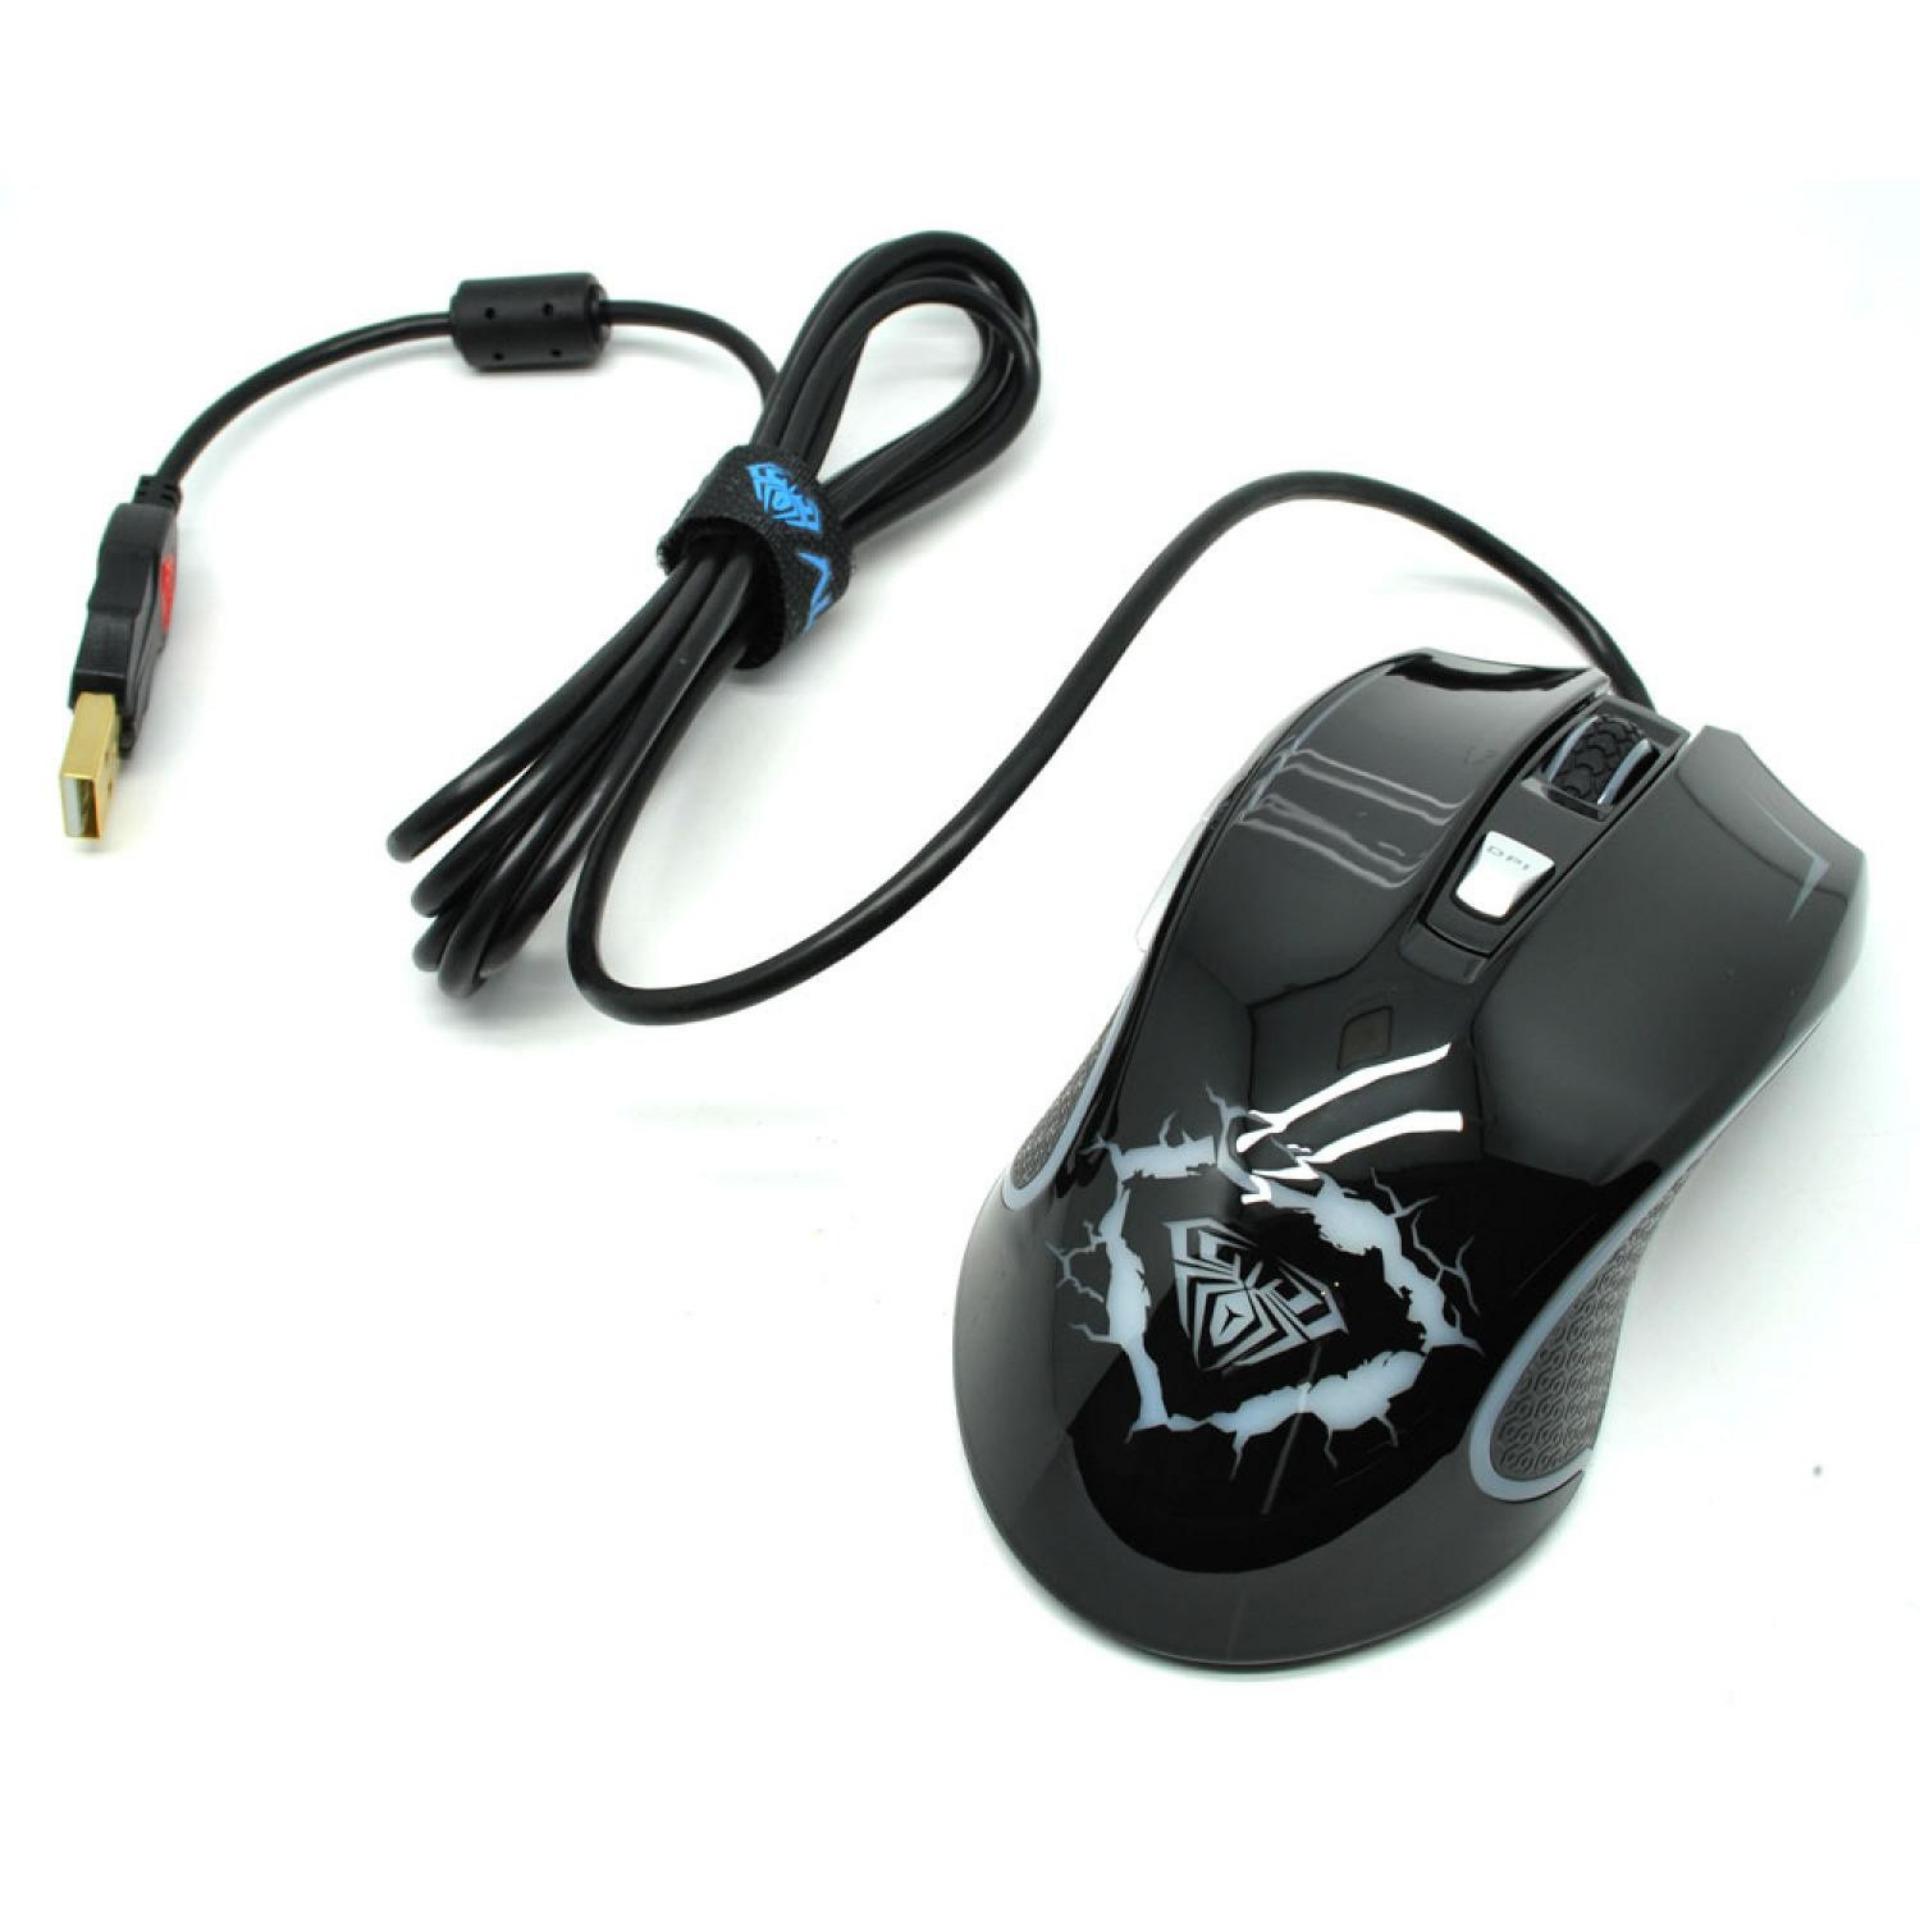 Aula Sanction Gaming Mouse 3500 DPI